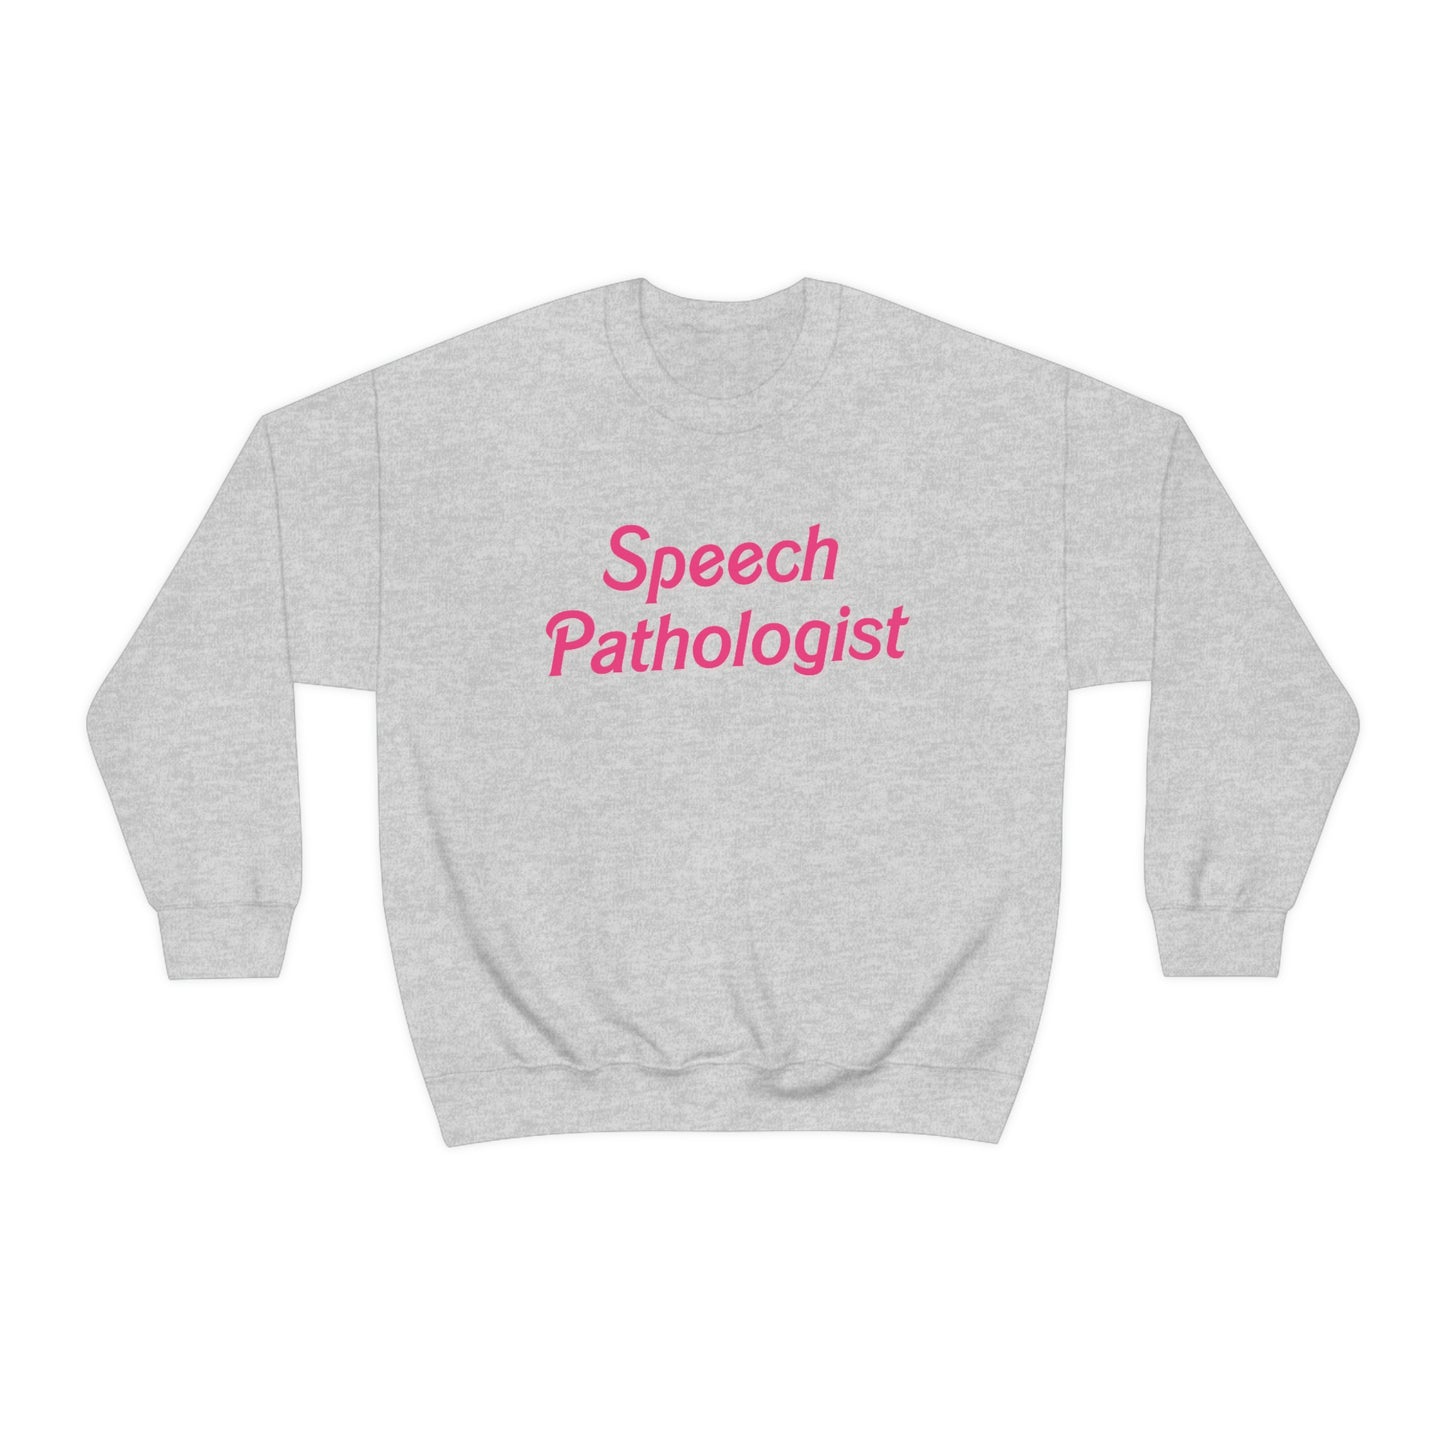 Speech Pathologist Crewneck Sweatshirt